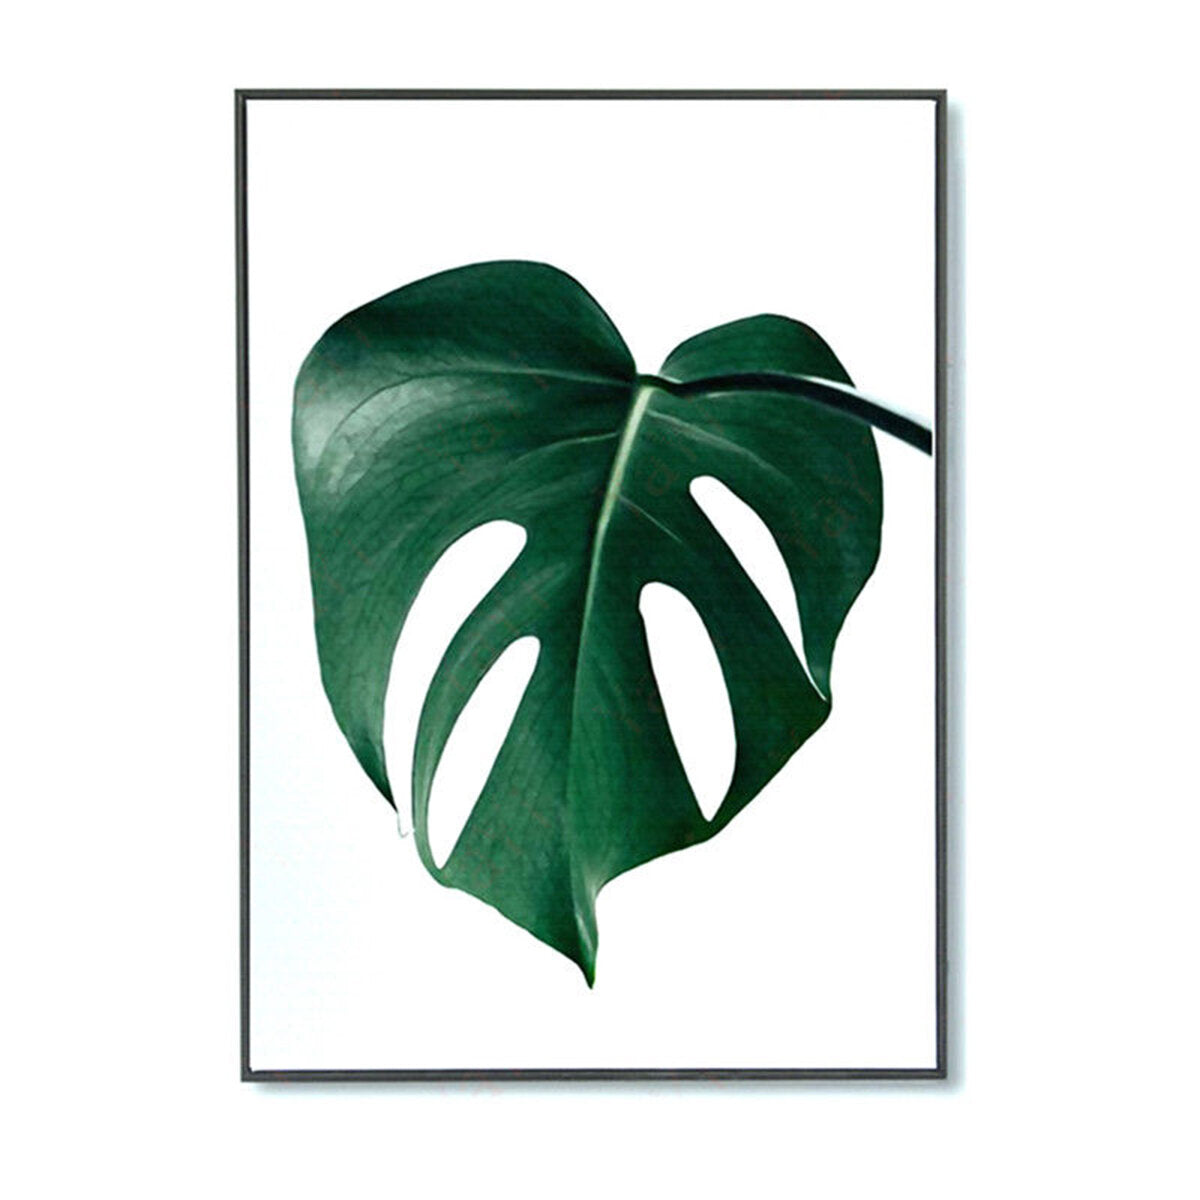 1 stuk canvas print schilderij nordic groene plant blad canvas art poster print muur foto home decor geen frame